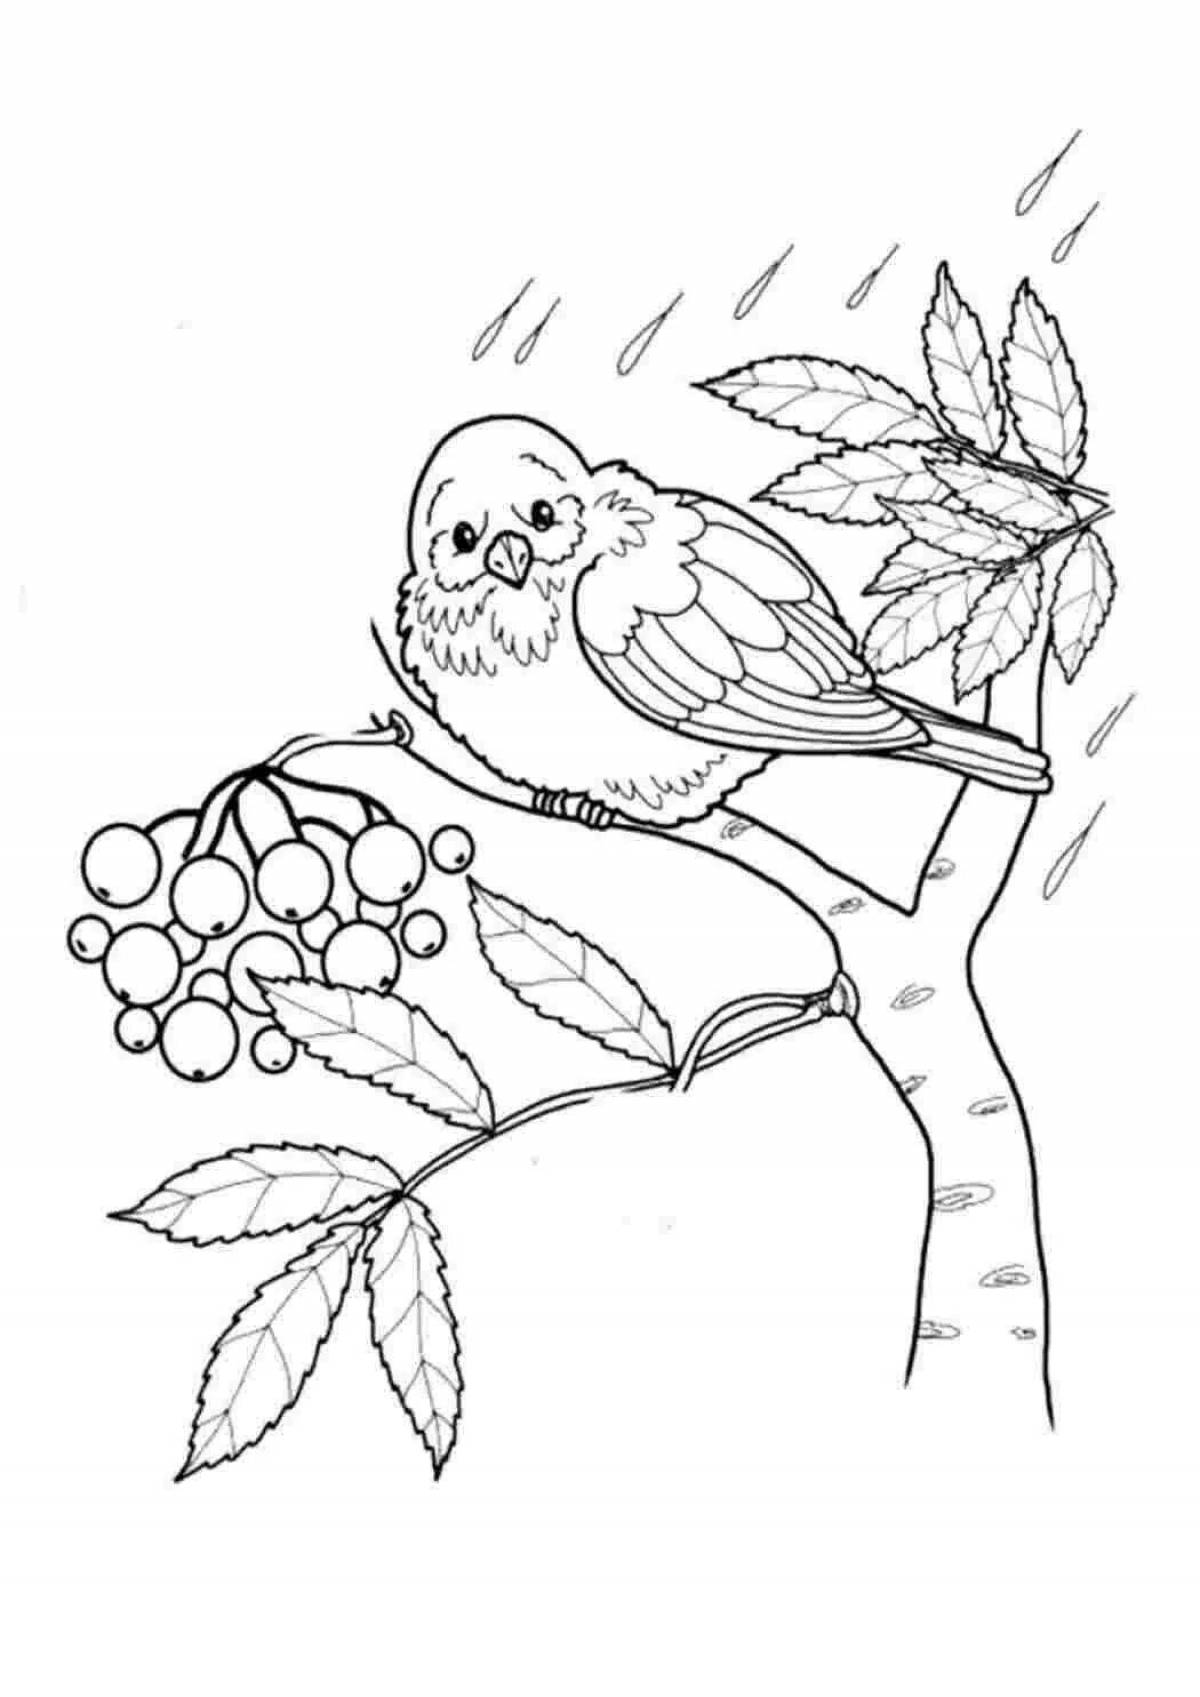 Royal bird on a branch